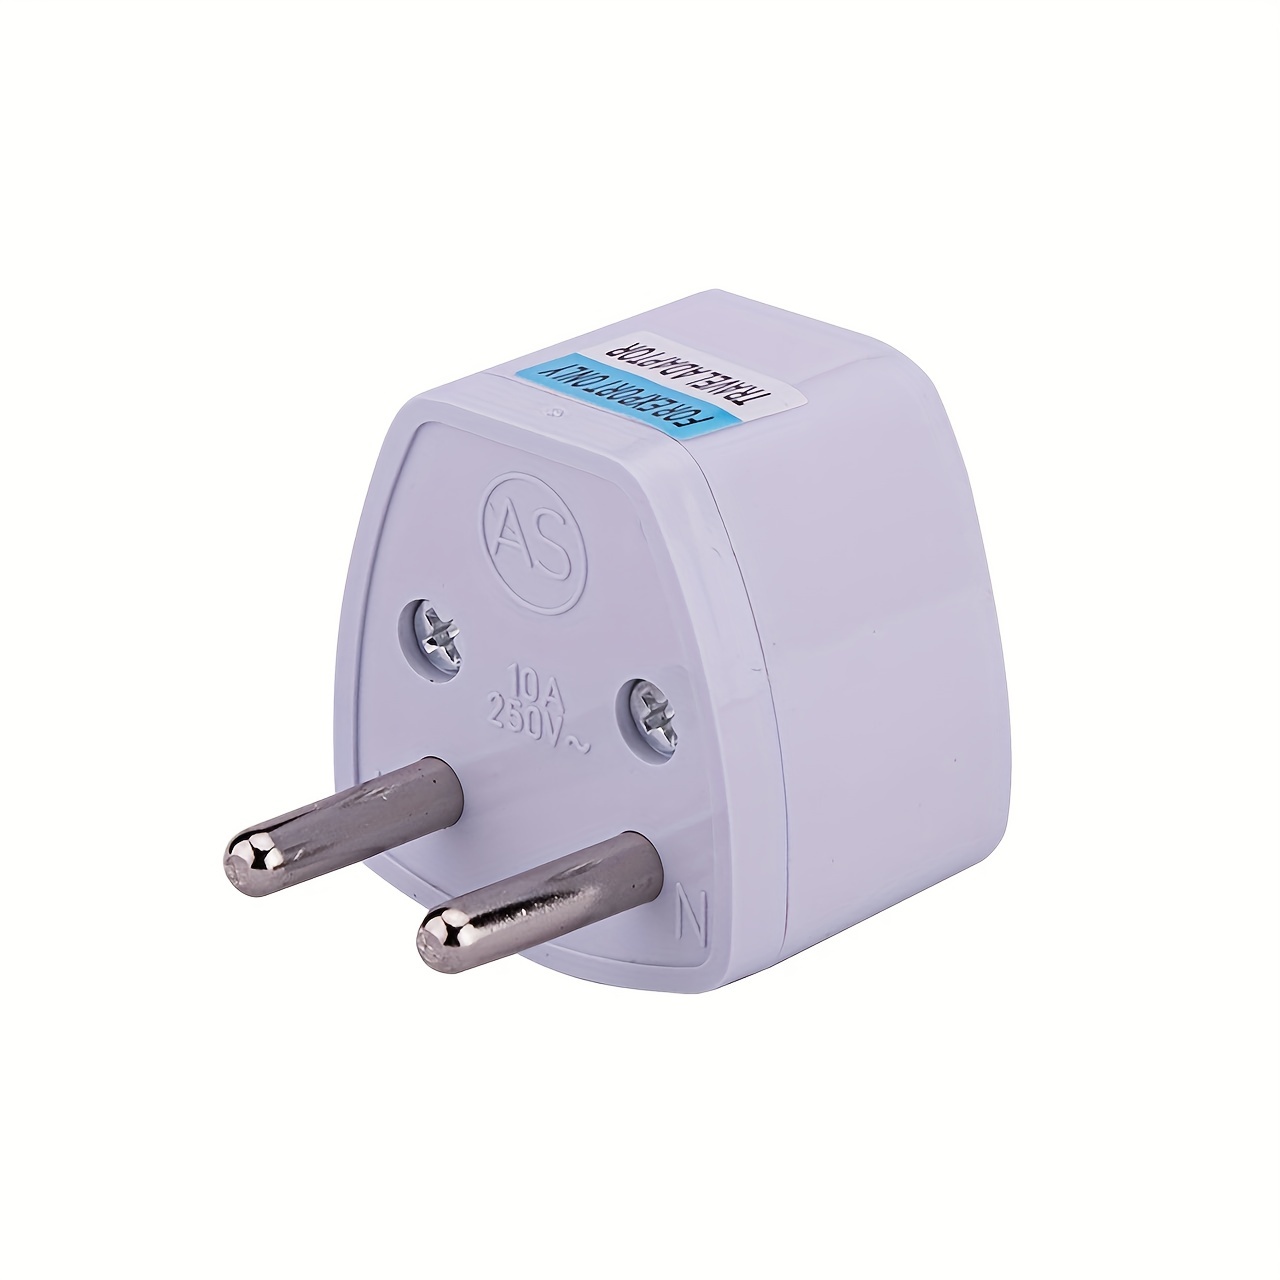 Universal Travel Adapter Plug Converter AC Power Plug Adapter AU EU To US UK  USA